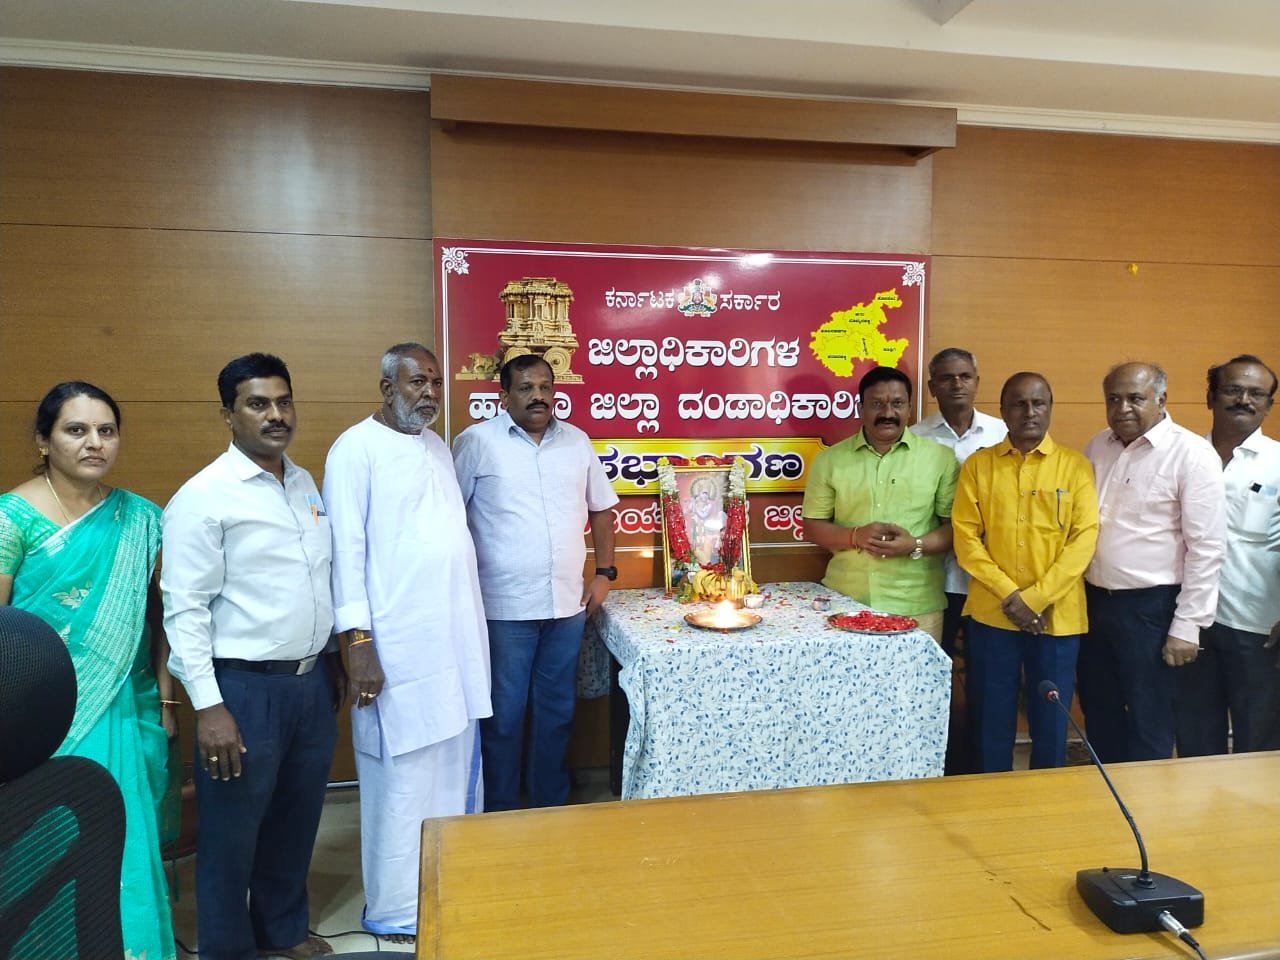 celebration of Shri Krishna Jayanti in Vijayanagar district